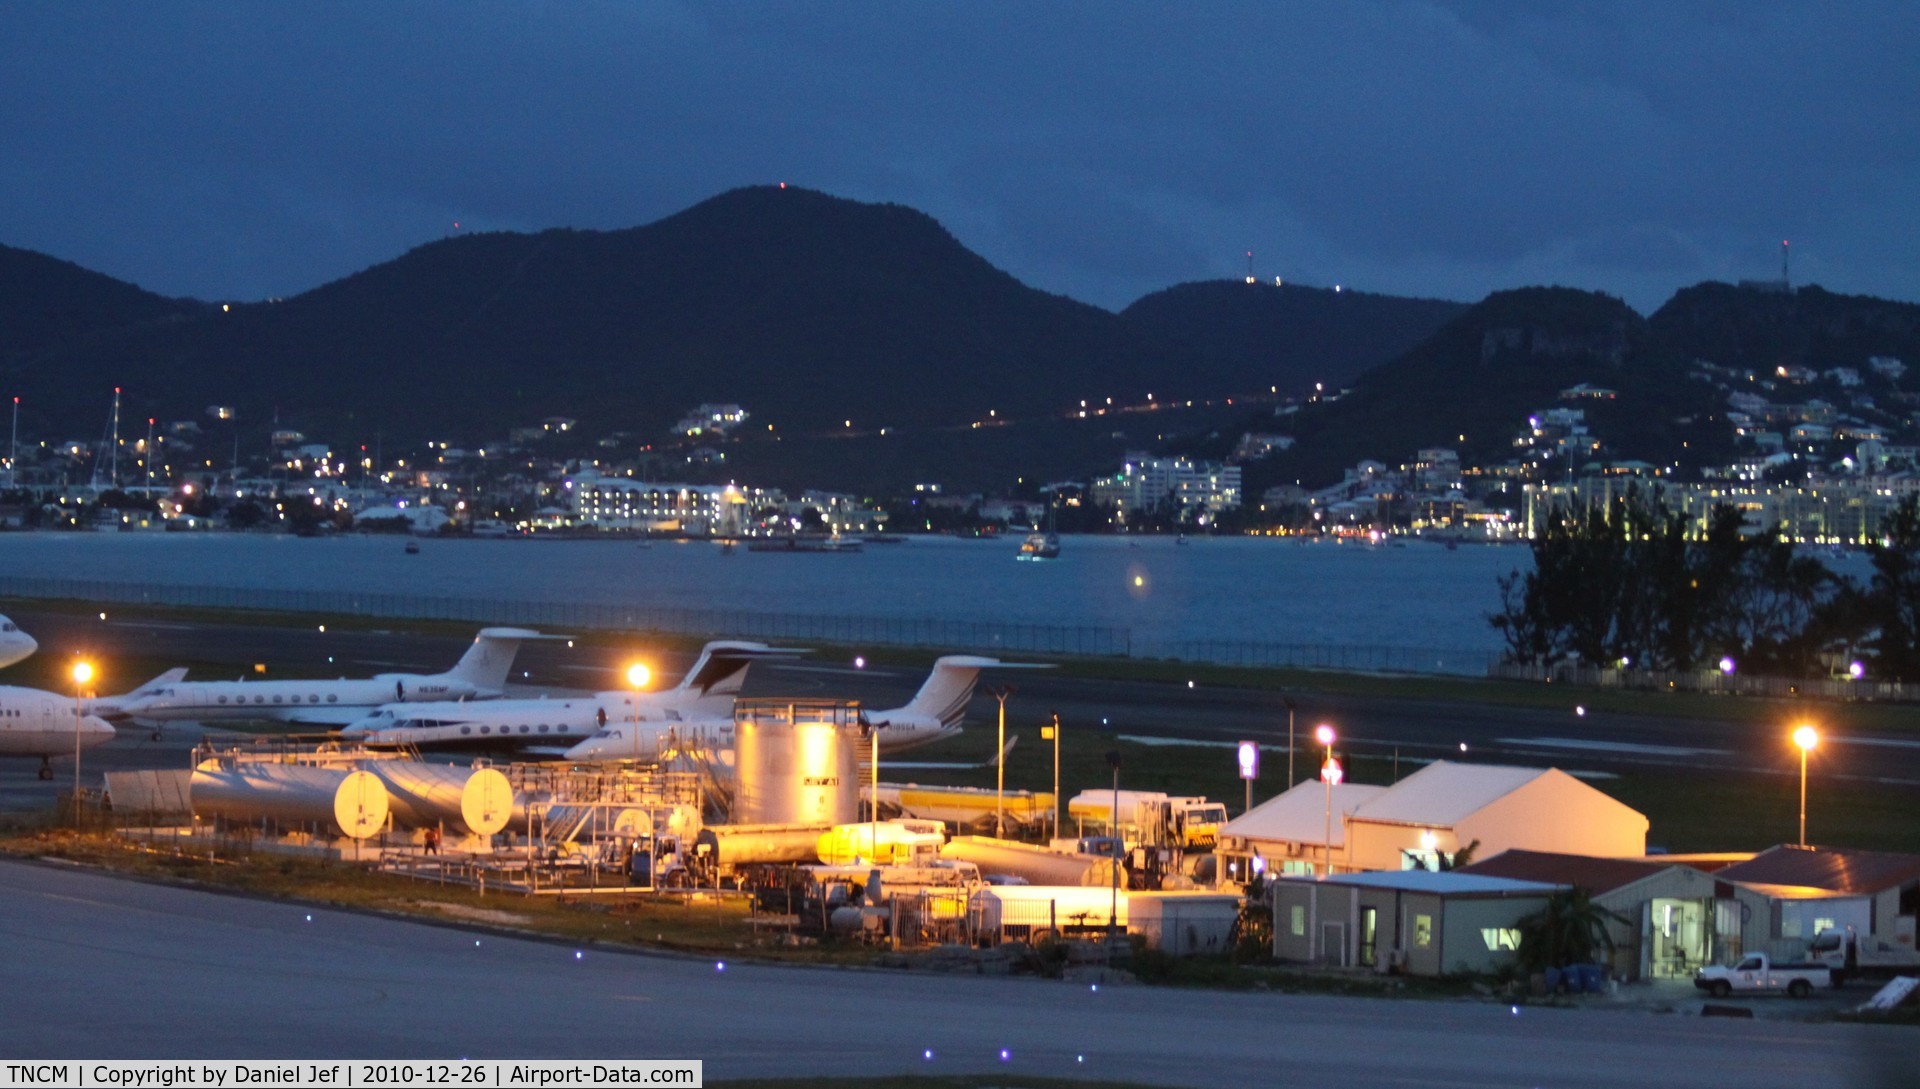 Princess Juliana International Airport, Philipsburg, Sint Maarten Netherlands Antilles (TNCM) - The fuel farm at night TNCM